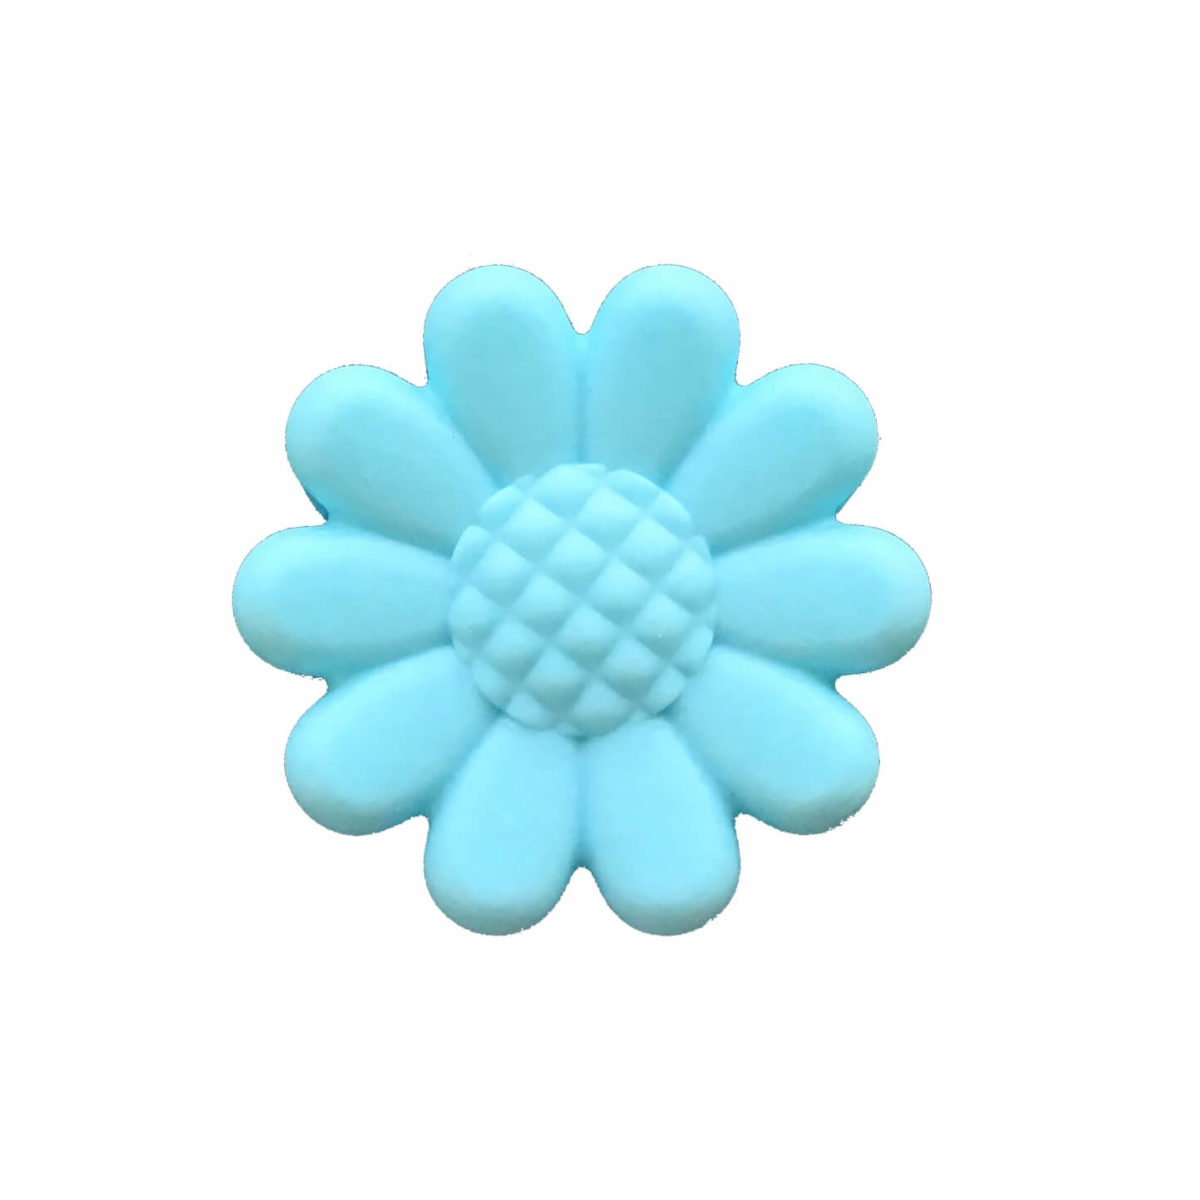 5cm blue daisy flower single cavity silicone mould